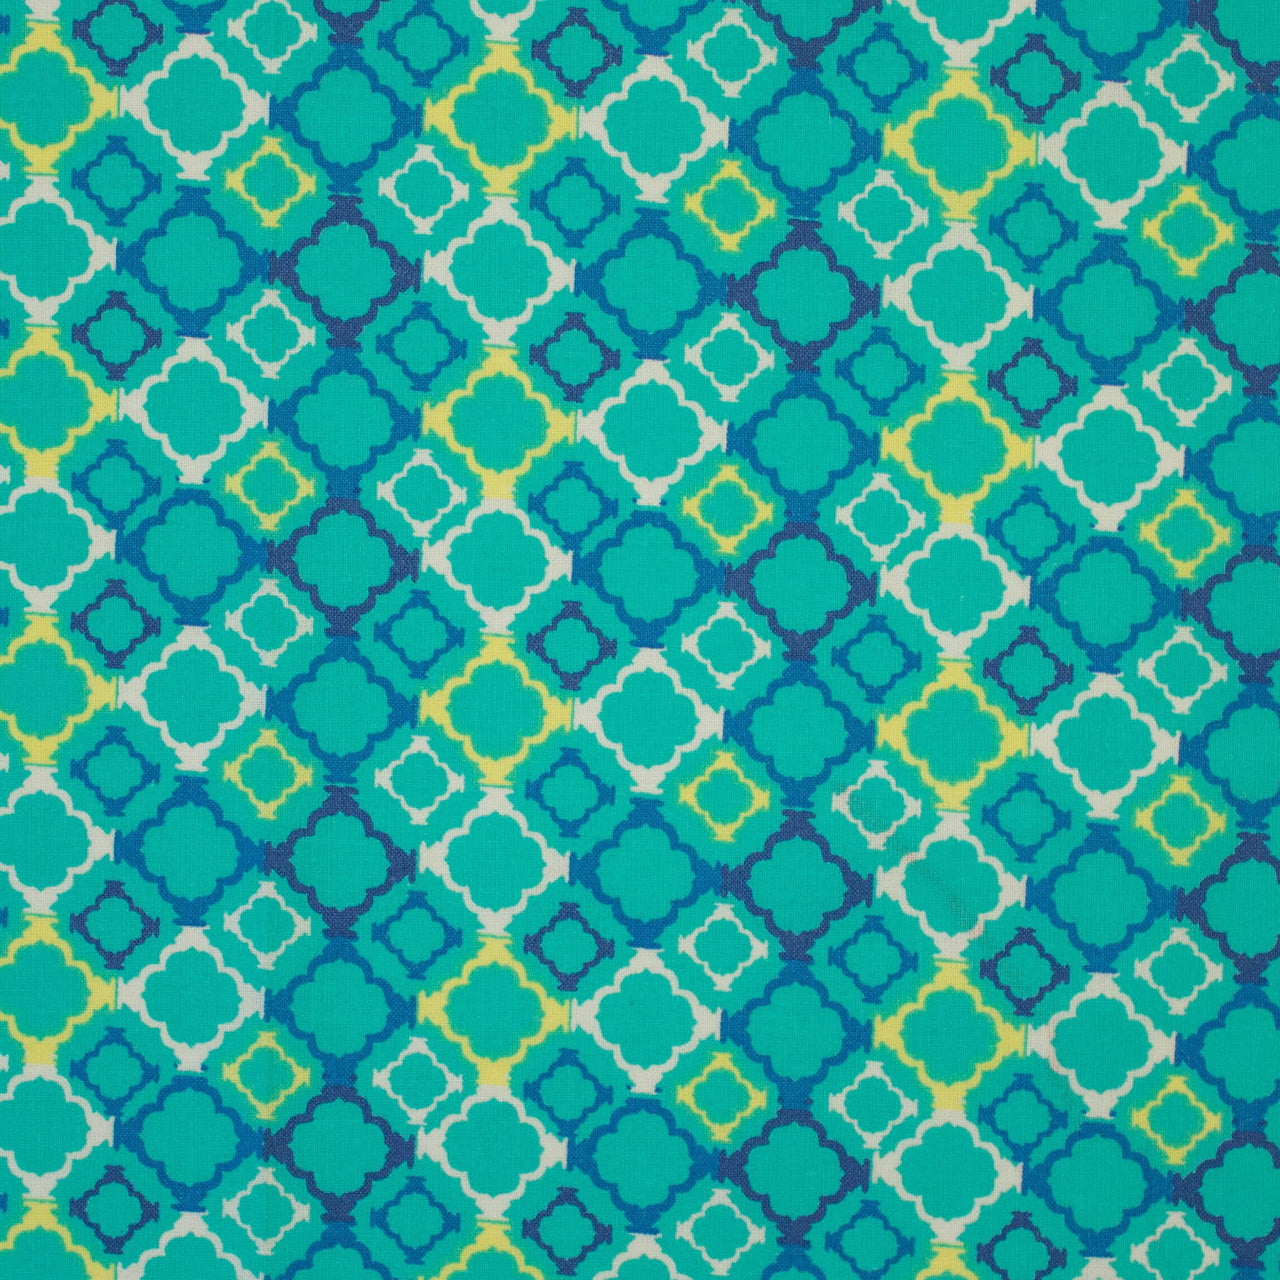 Green Geometric Printed Cotton Fabric - Square, Diamond, Harlequin Design